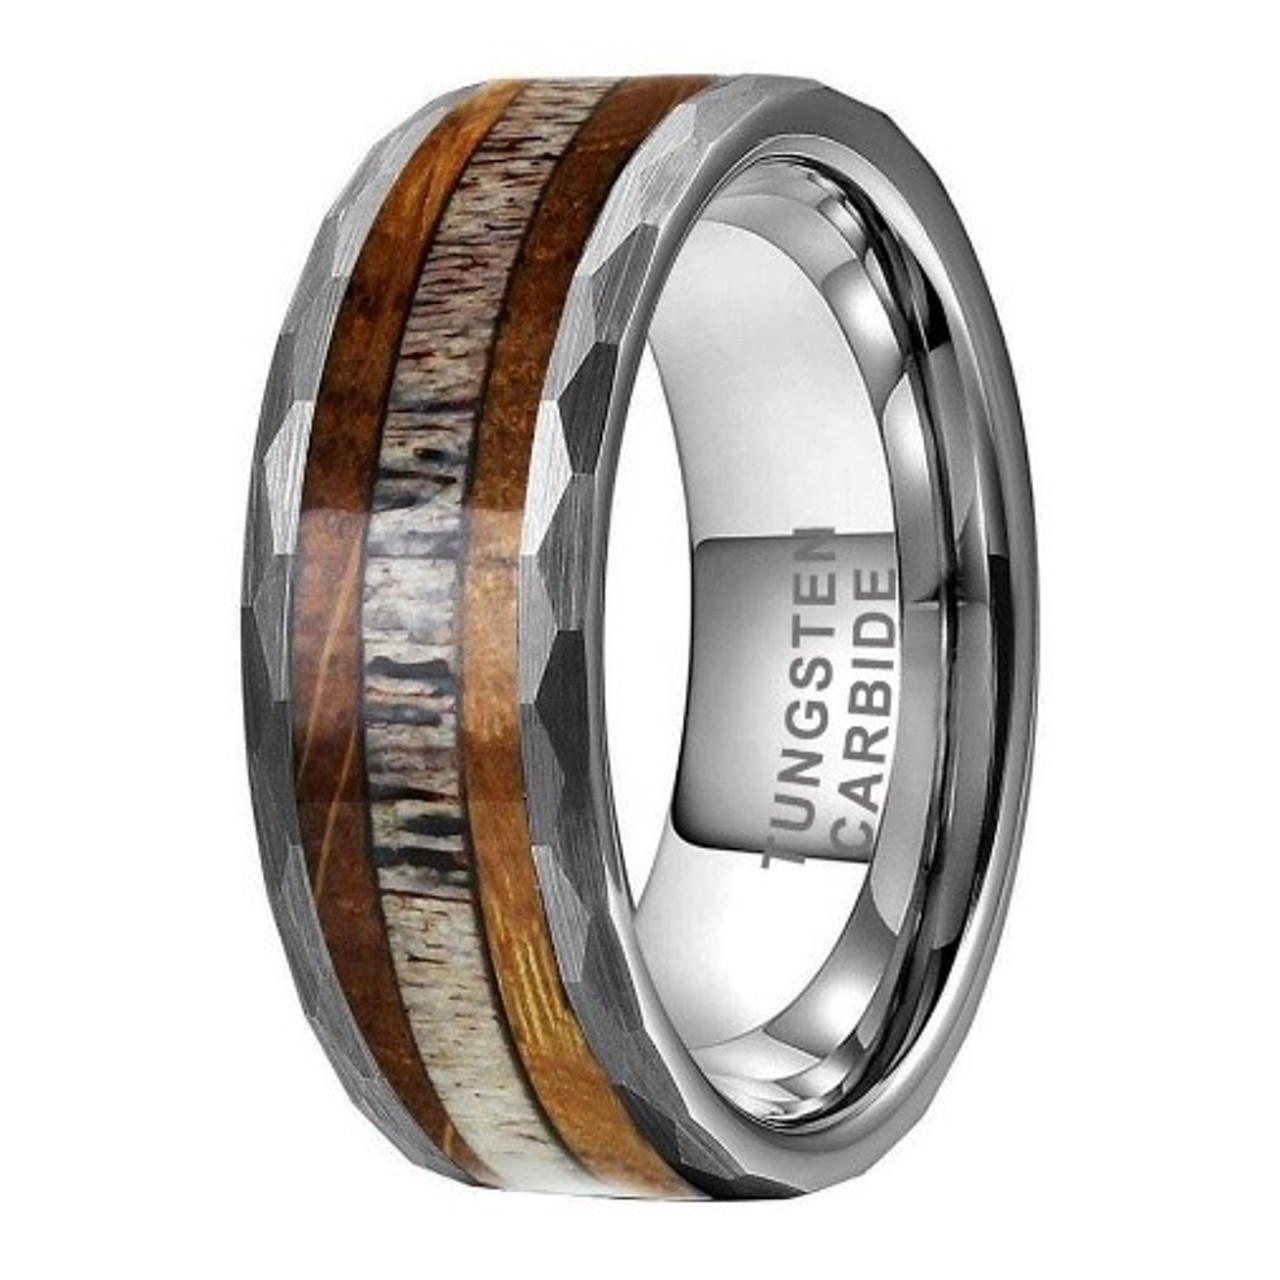 Hammered Tungsten Ring - Whisky Barrel Wood/Deer Antler Inlay